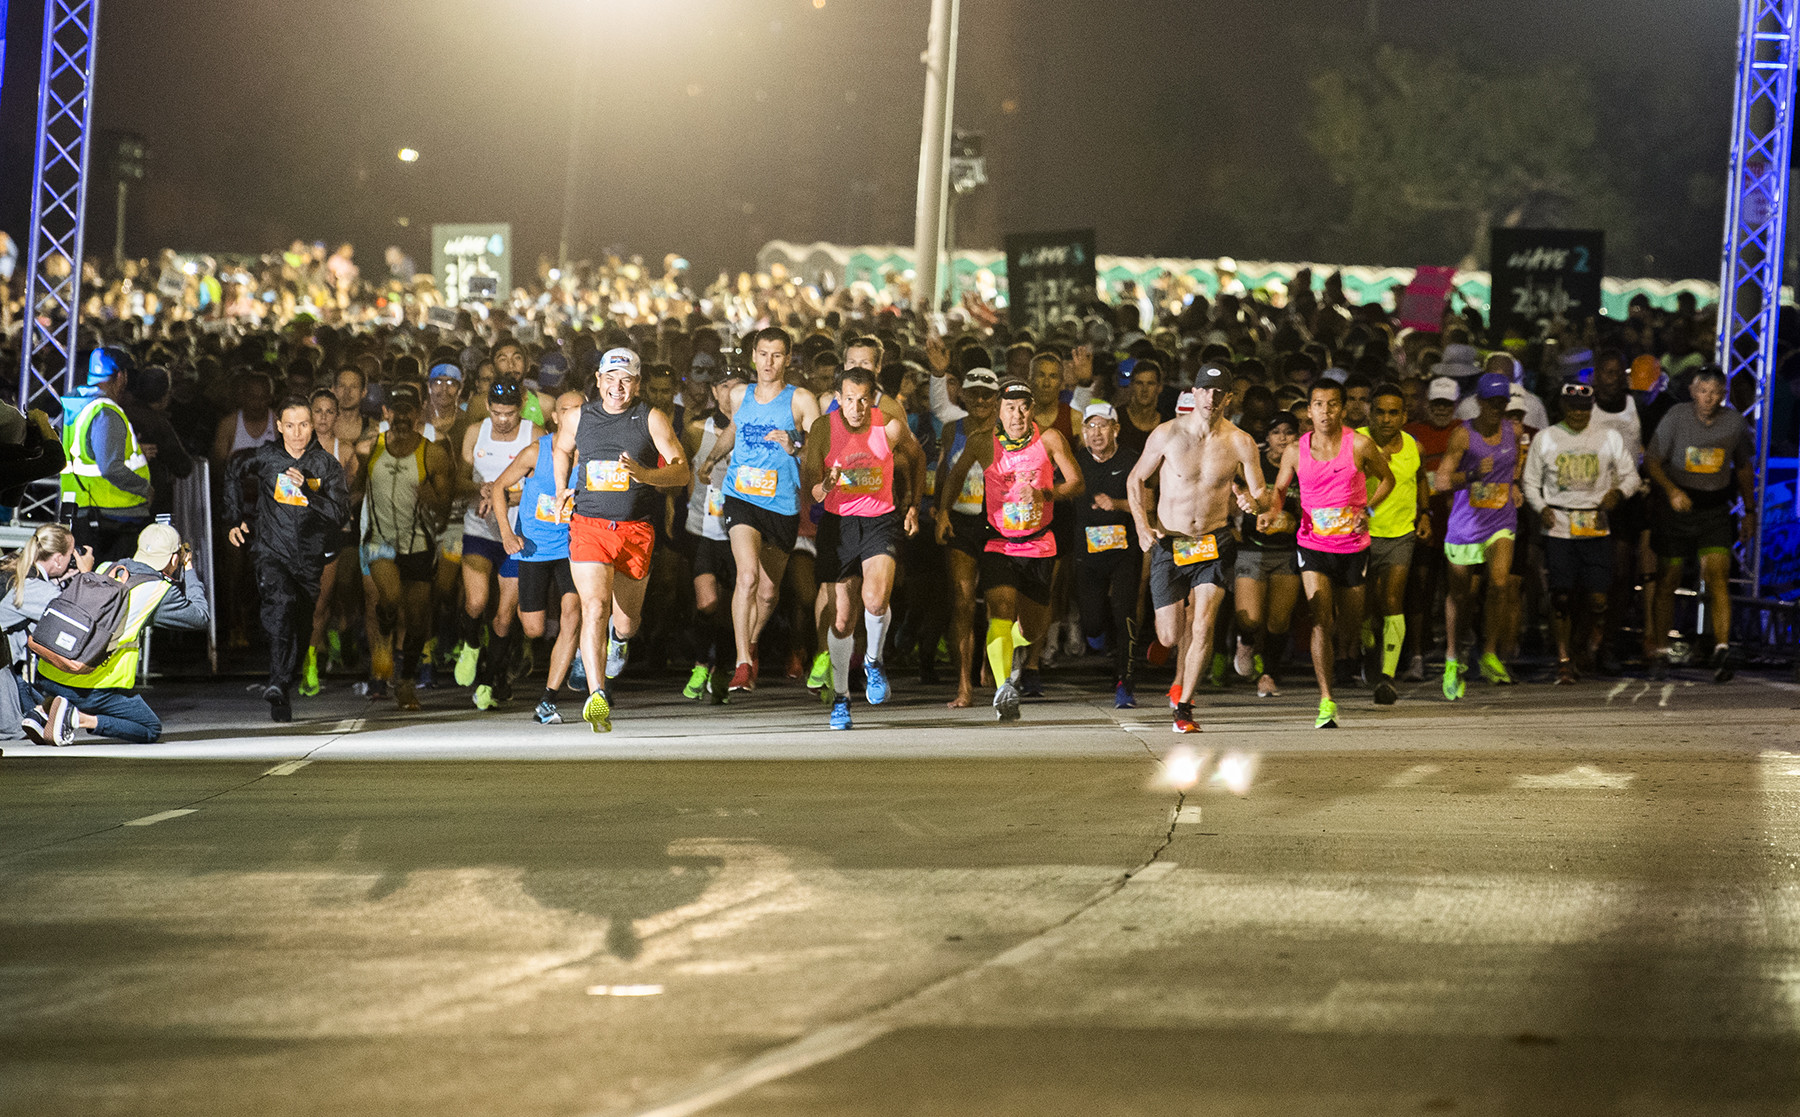 The 2020 Long Beach Marathon has been cancelled due to the coronavirus concerns